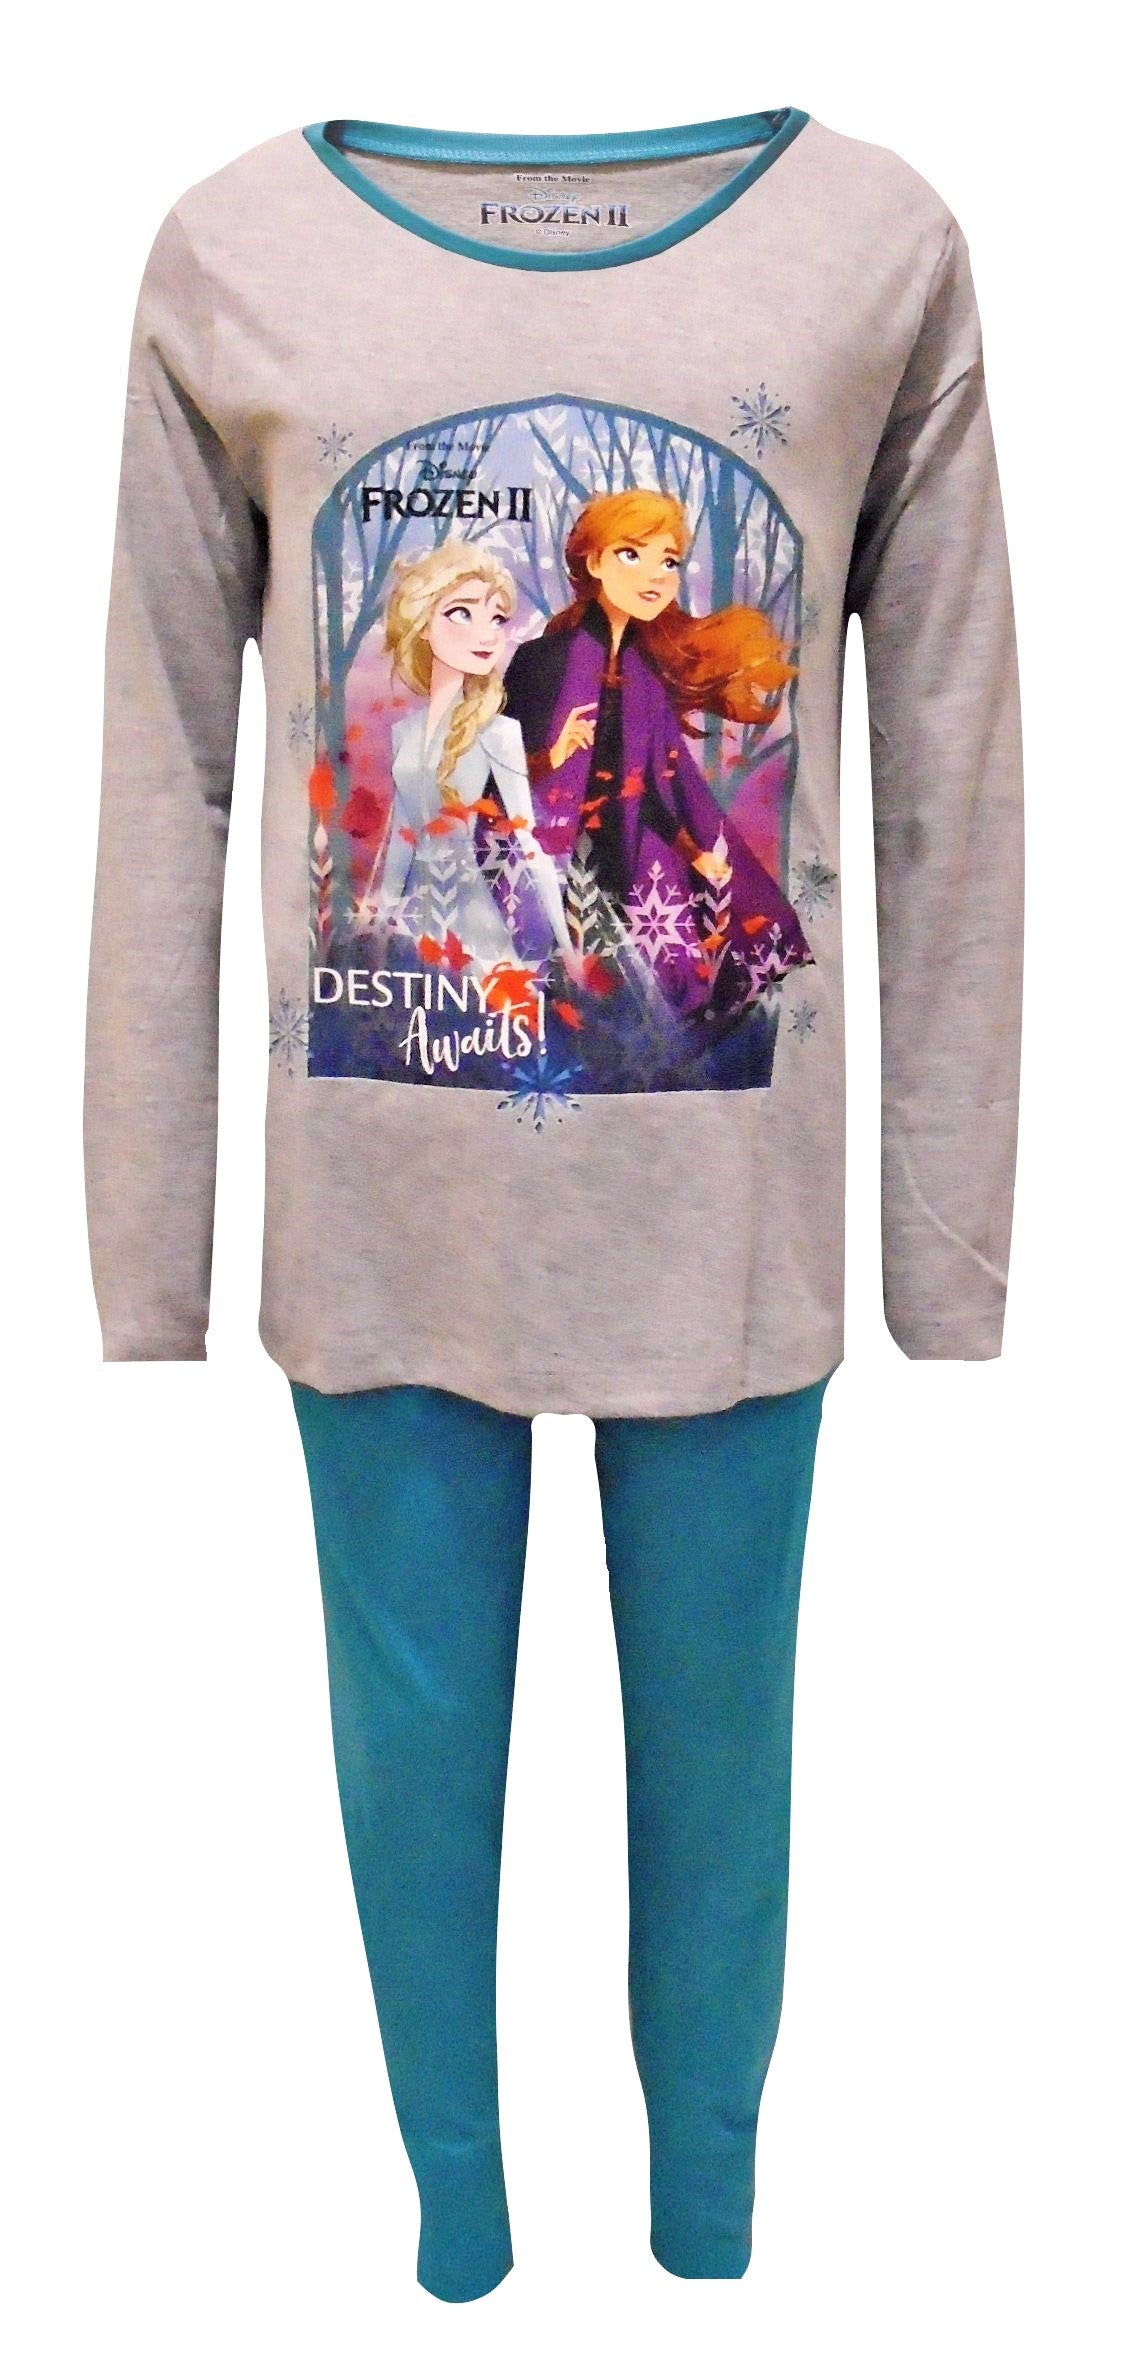 Girls Disney Frozen 2 "Destiny Awaits" pyjamas.